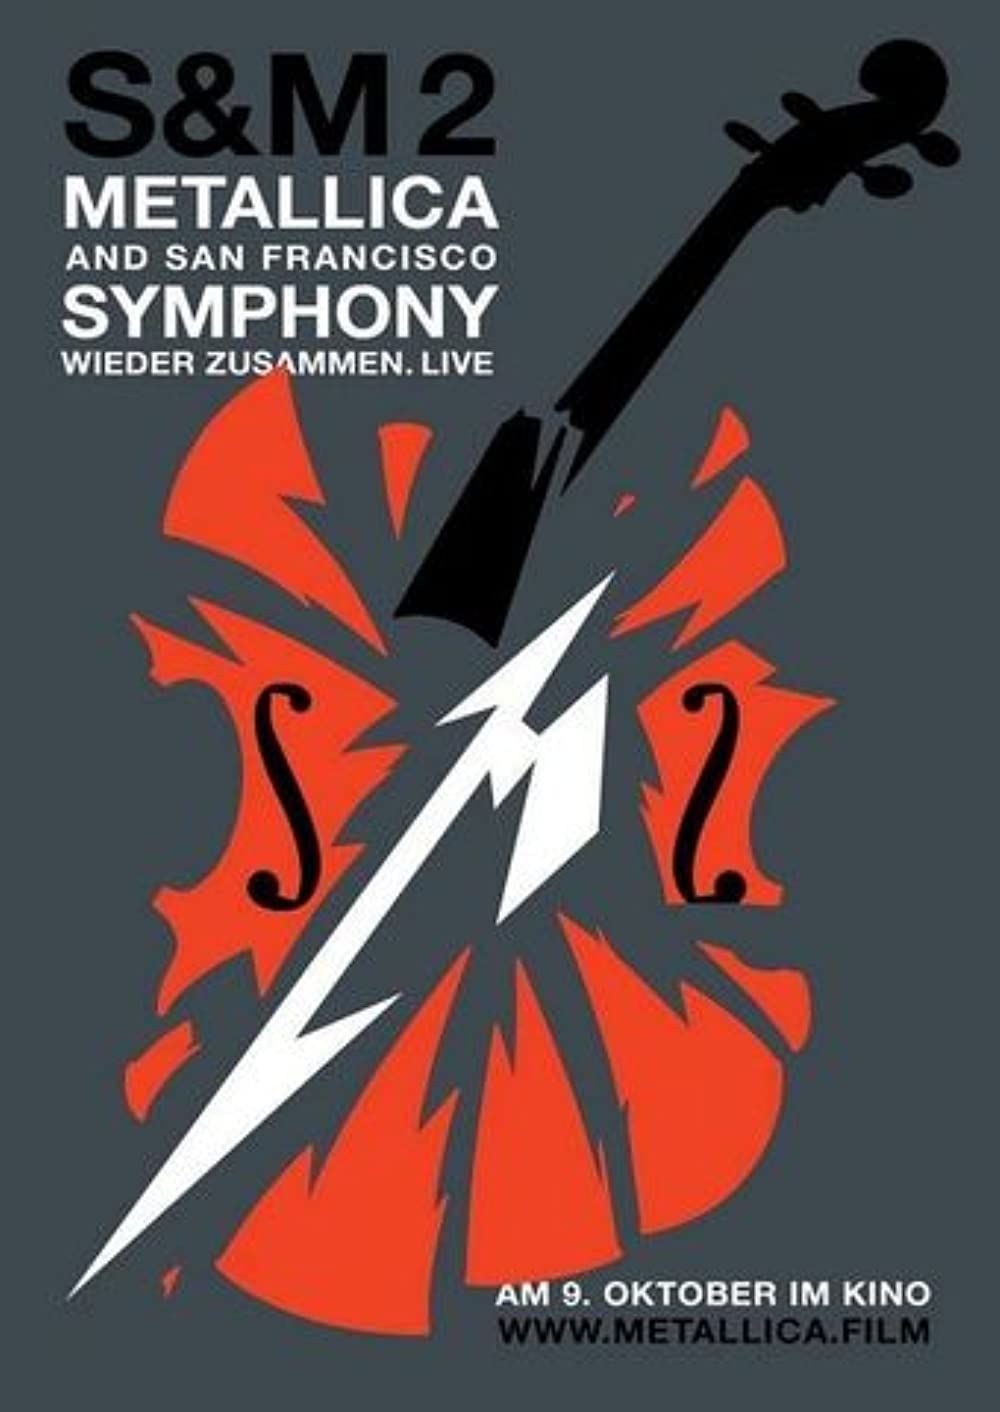 Metallica and San Francisco Symphony: S&M²